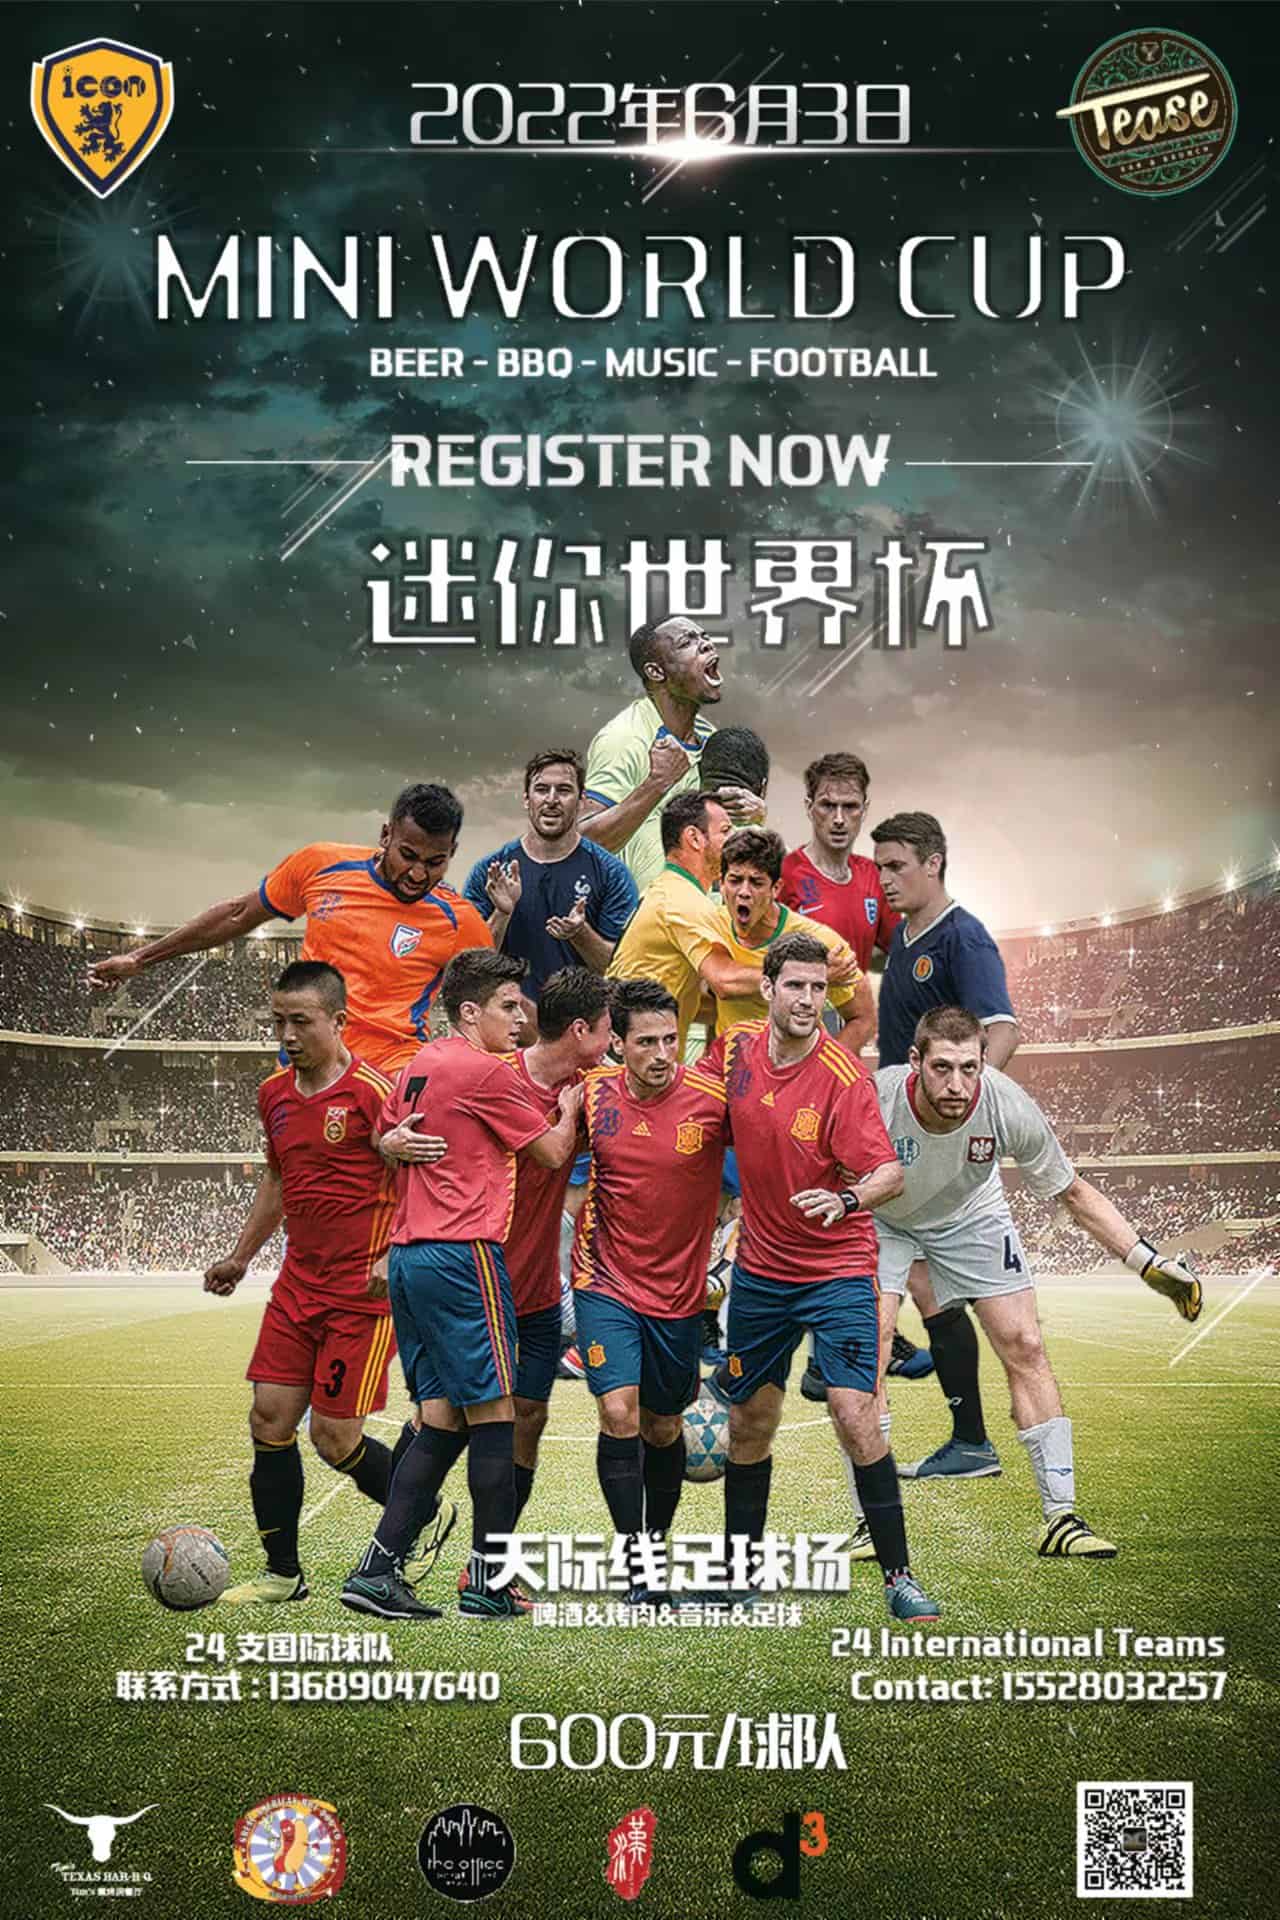 June 8: Mini World Cup, Chengdu